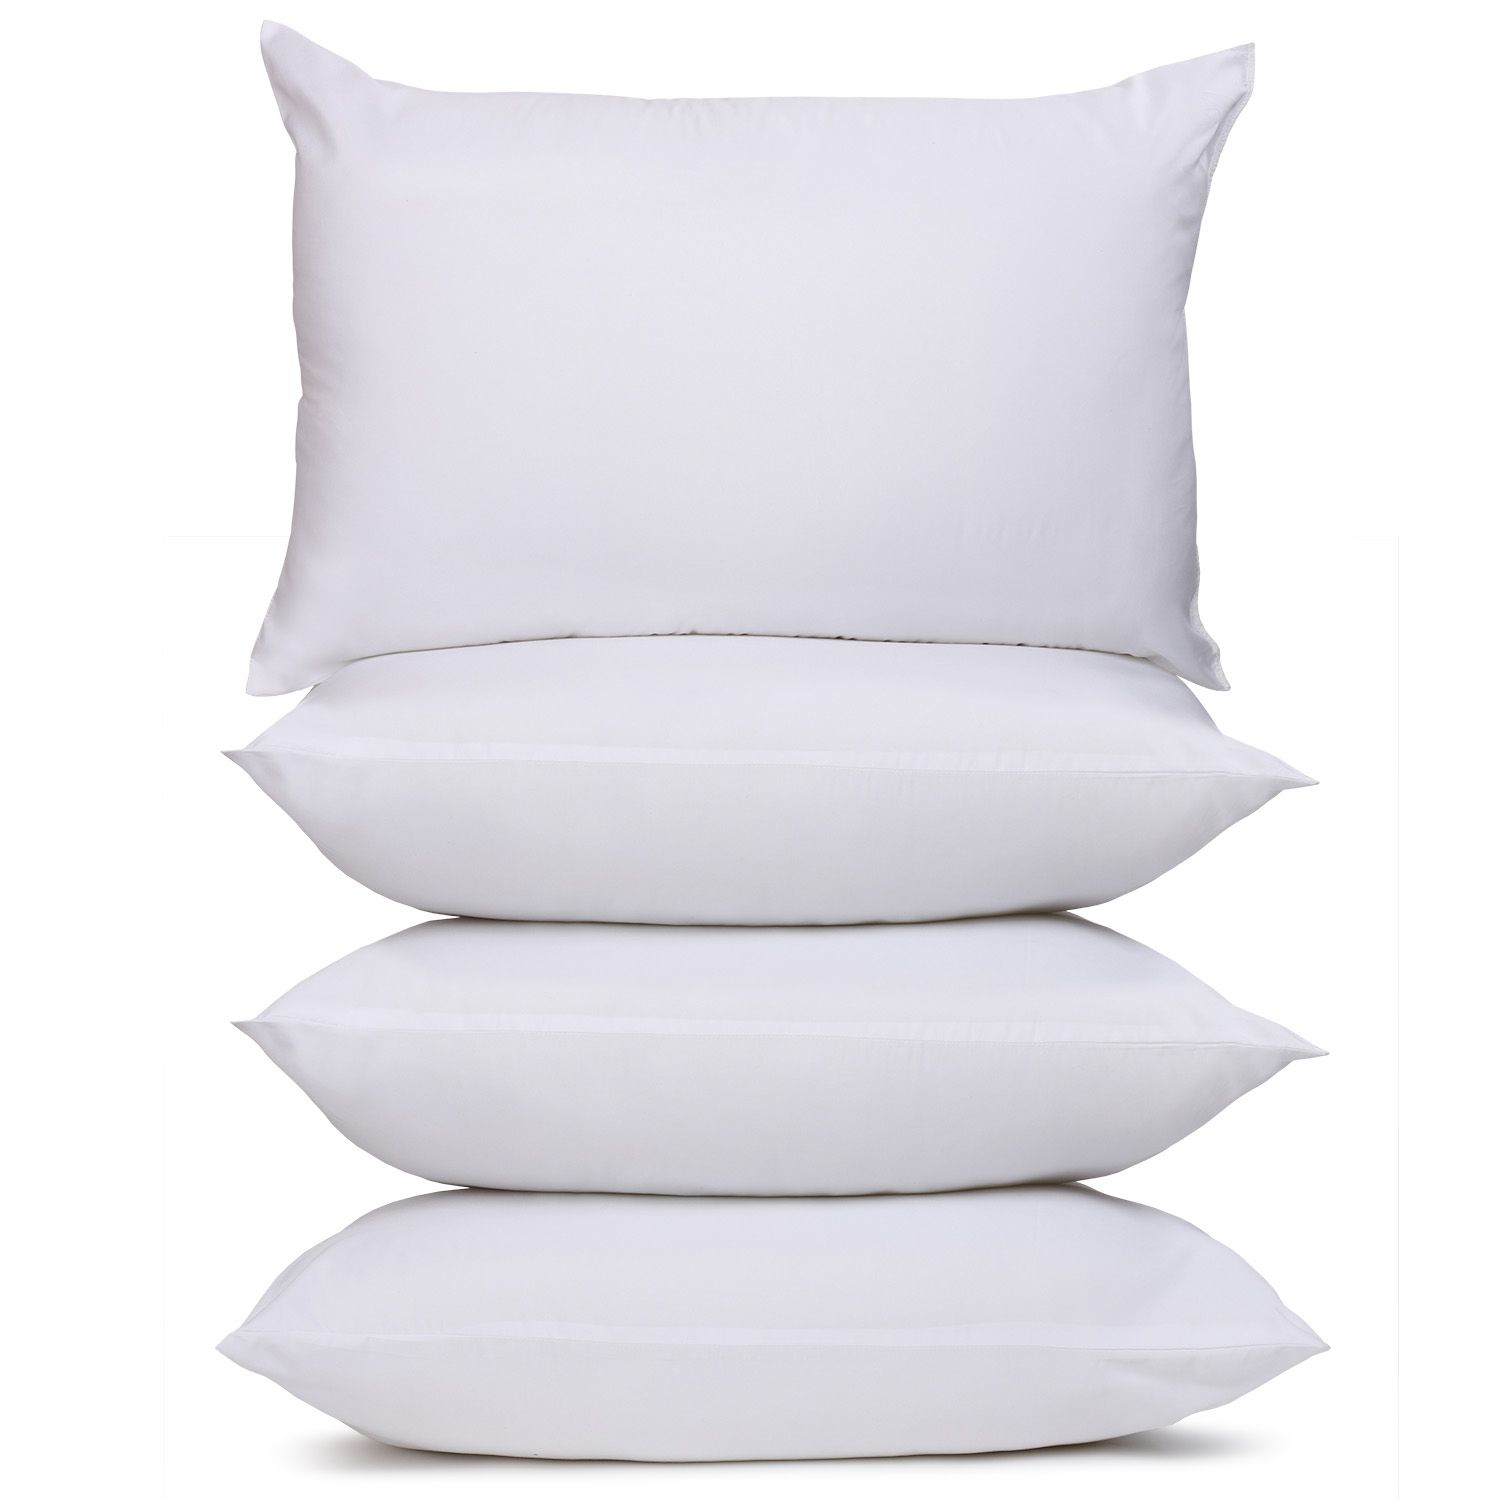 Fingerhut - DreamSleep Hypoallergenic Pillow 4-Pack - Standard